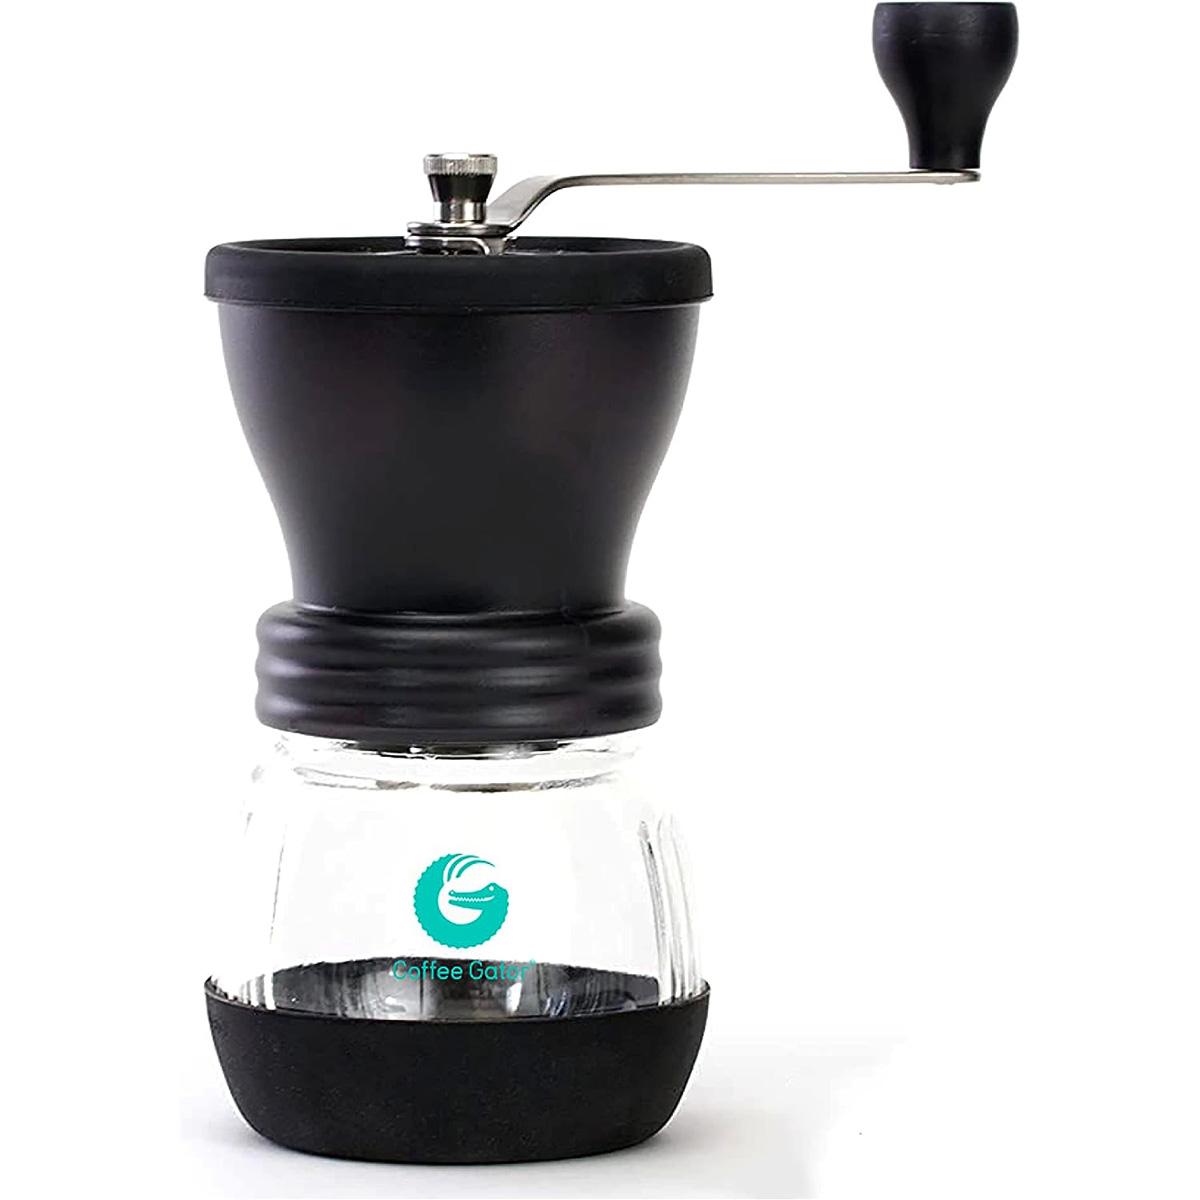 Coffee Gator Manual Hand Crank Adjustable Burr Coffee Grinder for $10.05